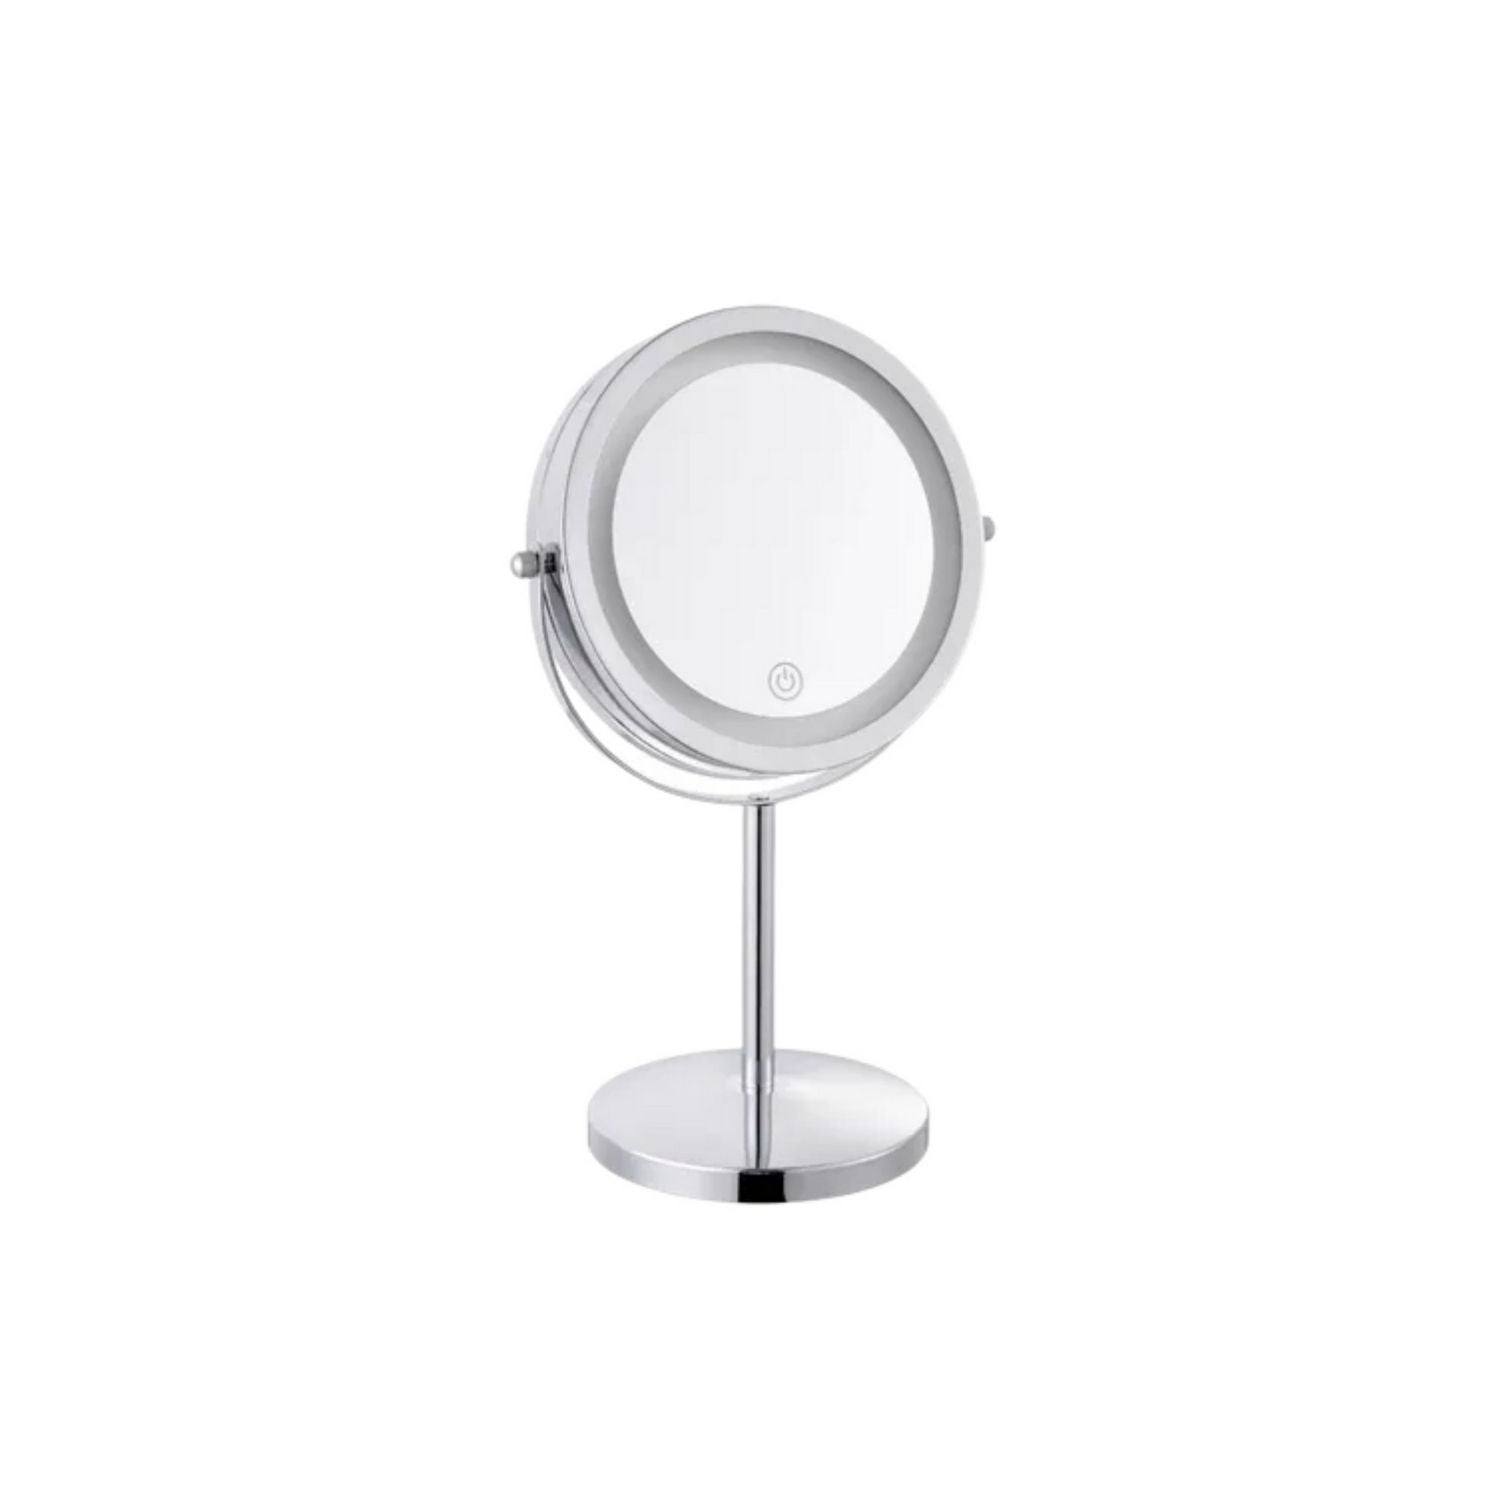 Espejo de Vanidad Giratorio con Luz Touch integrada para Baño con Aumento.